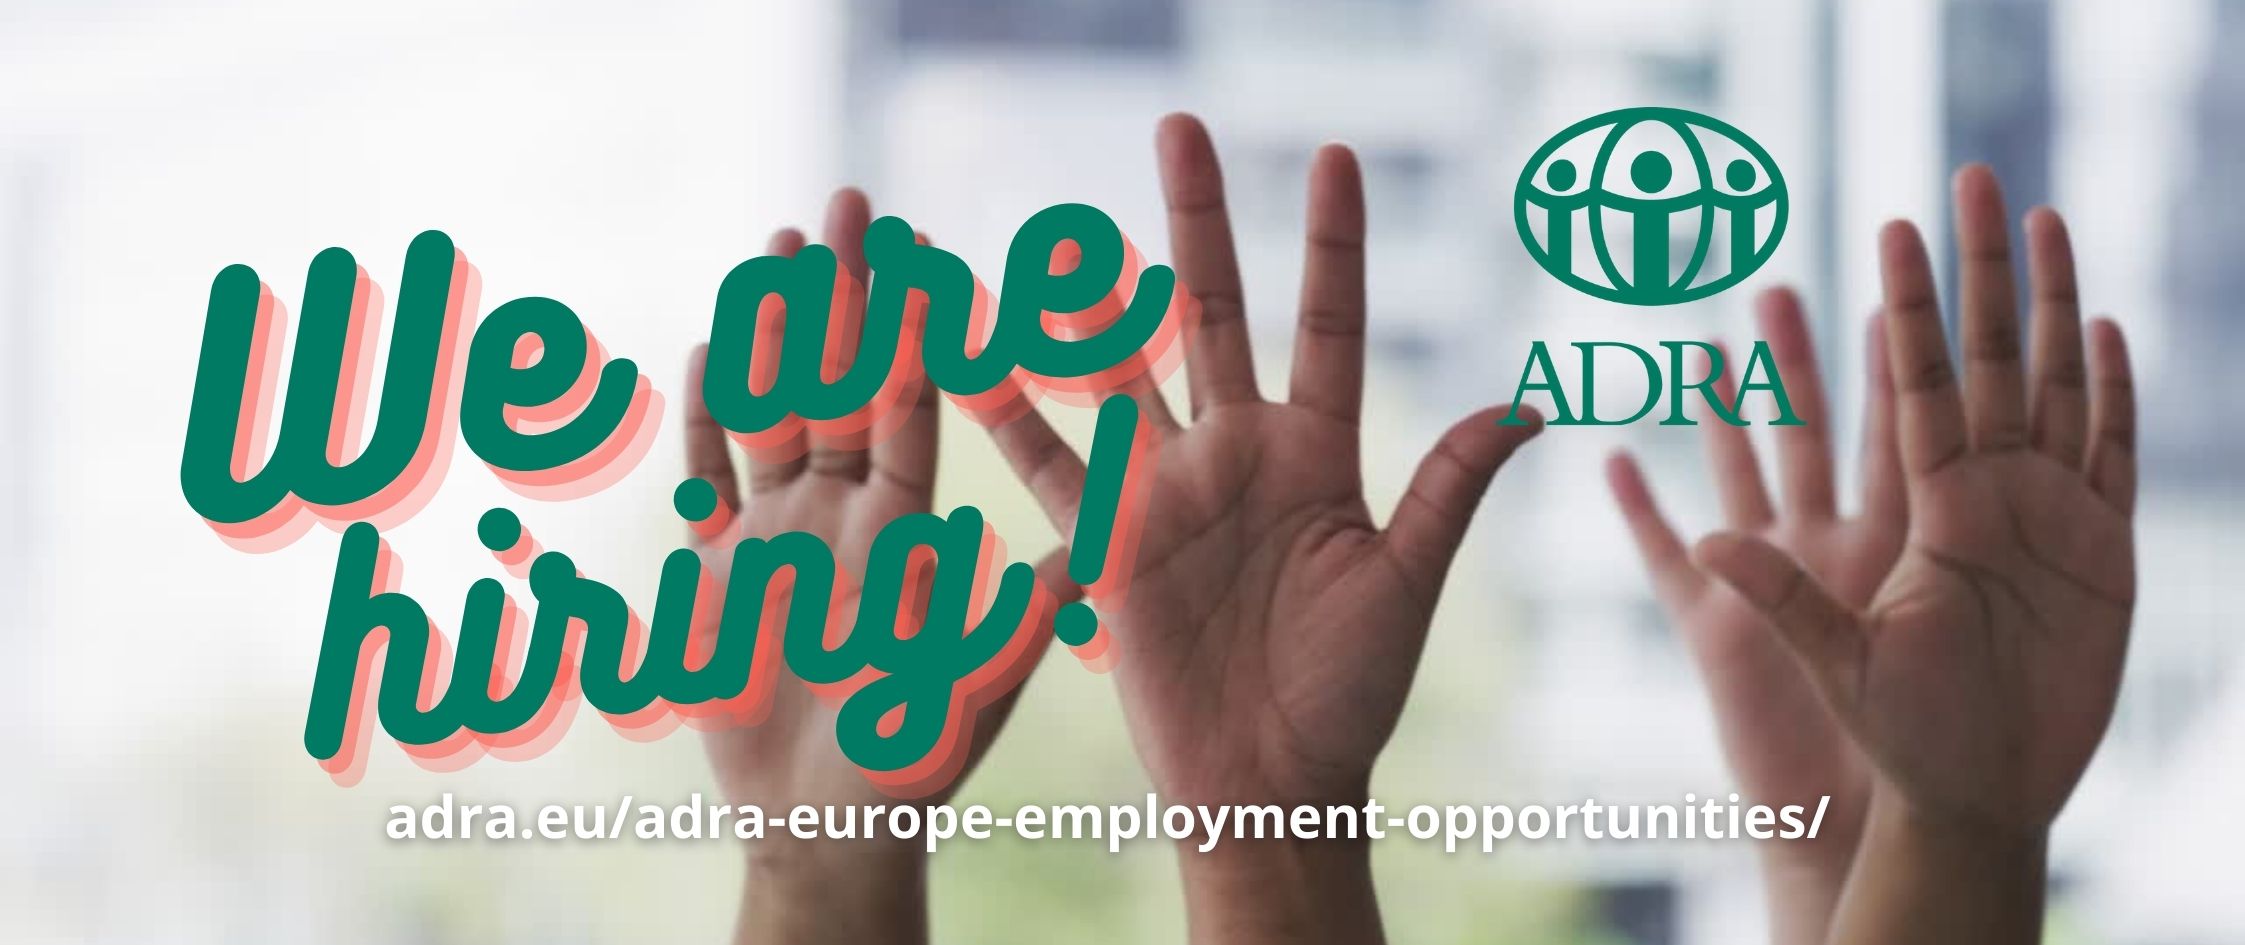 ADRA Europe employment opportunities